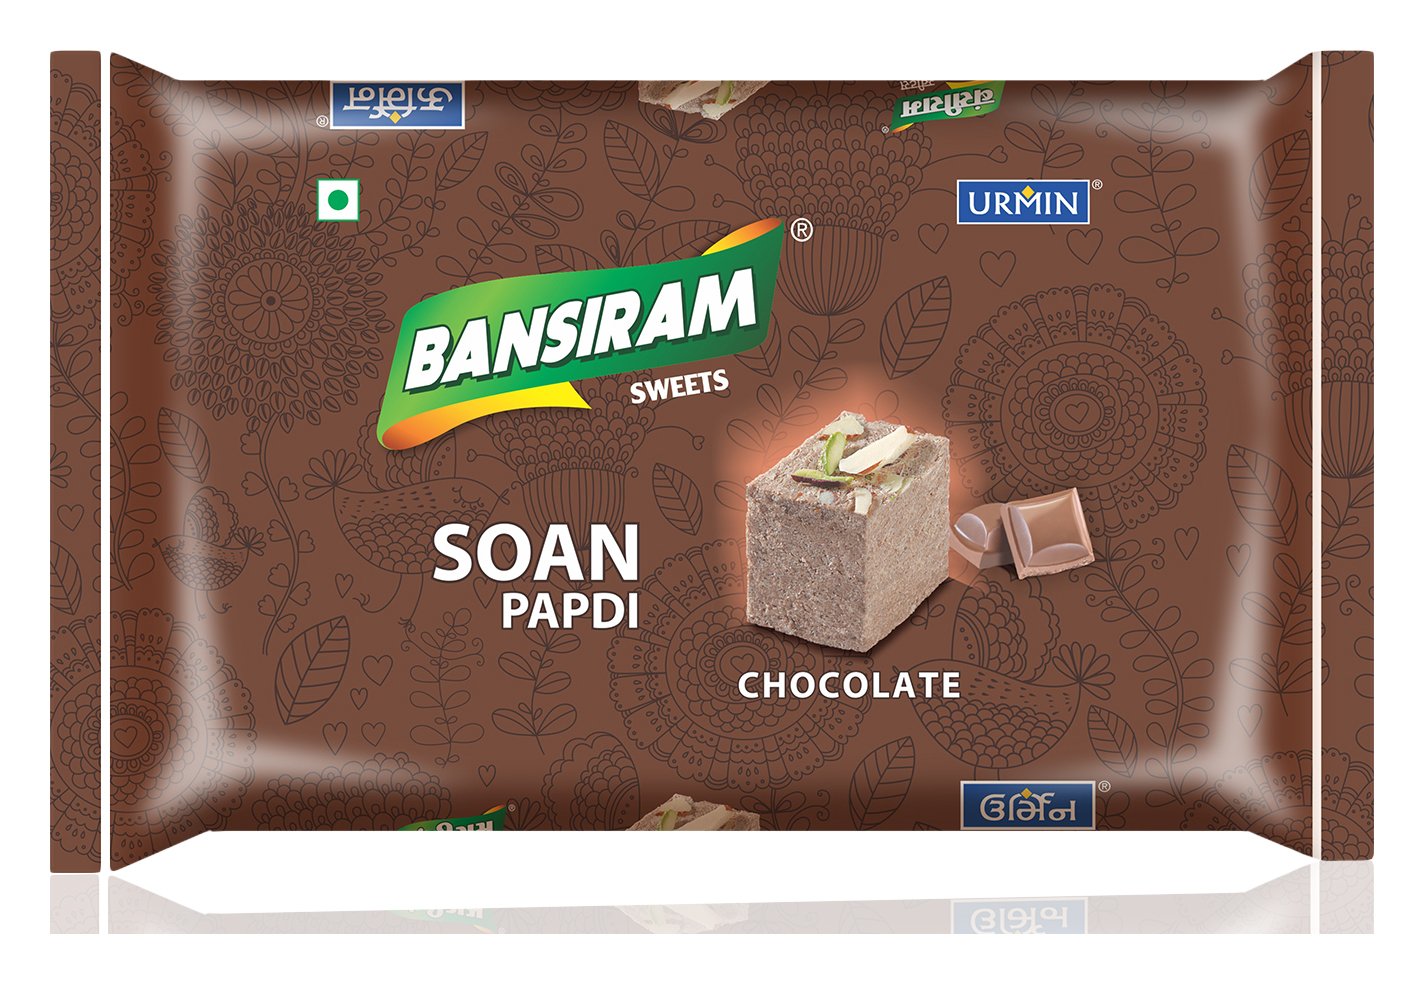 Soan Papdi CHOCOLATE Bansiram Sweets (Соан папди с ШОКОЛАДОМ, Бансирам), 250 г.